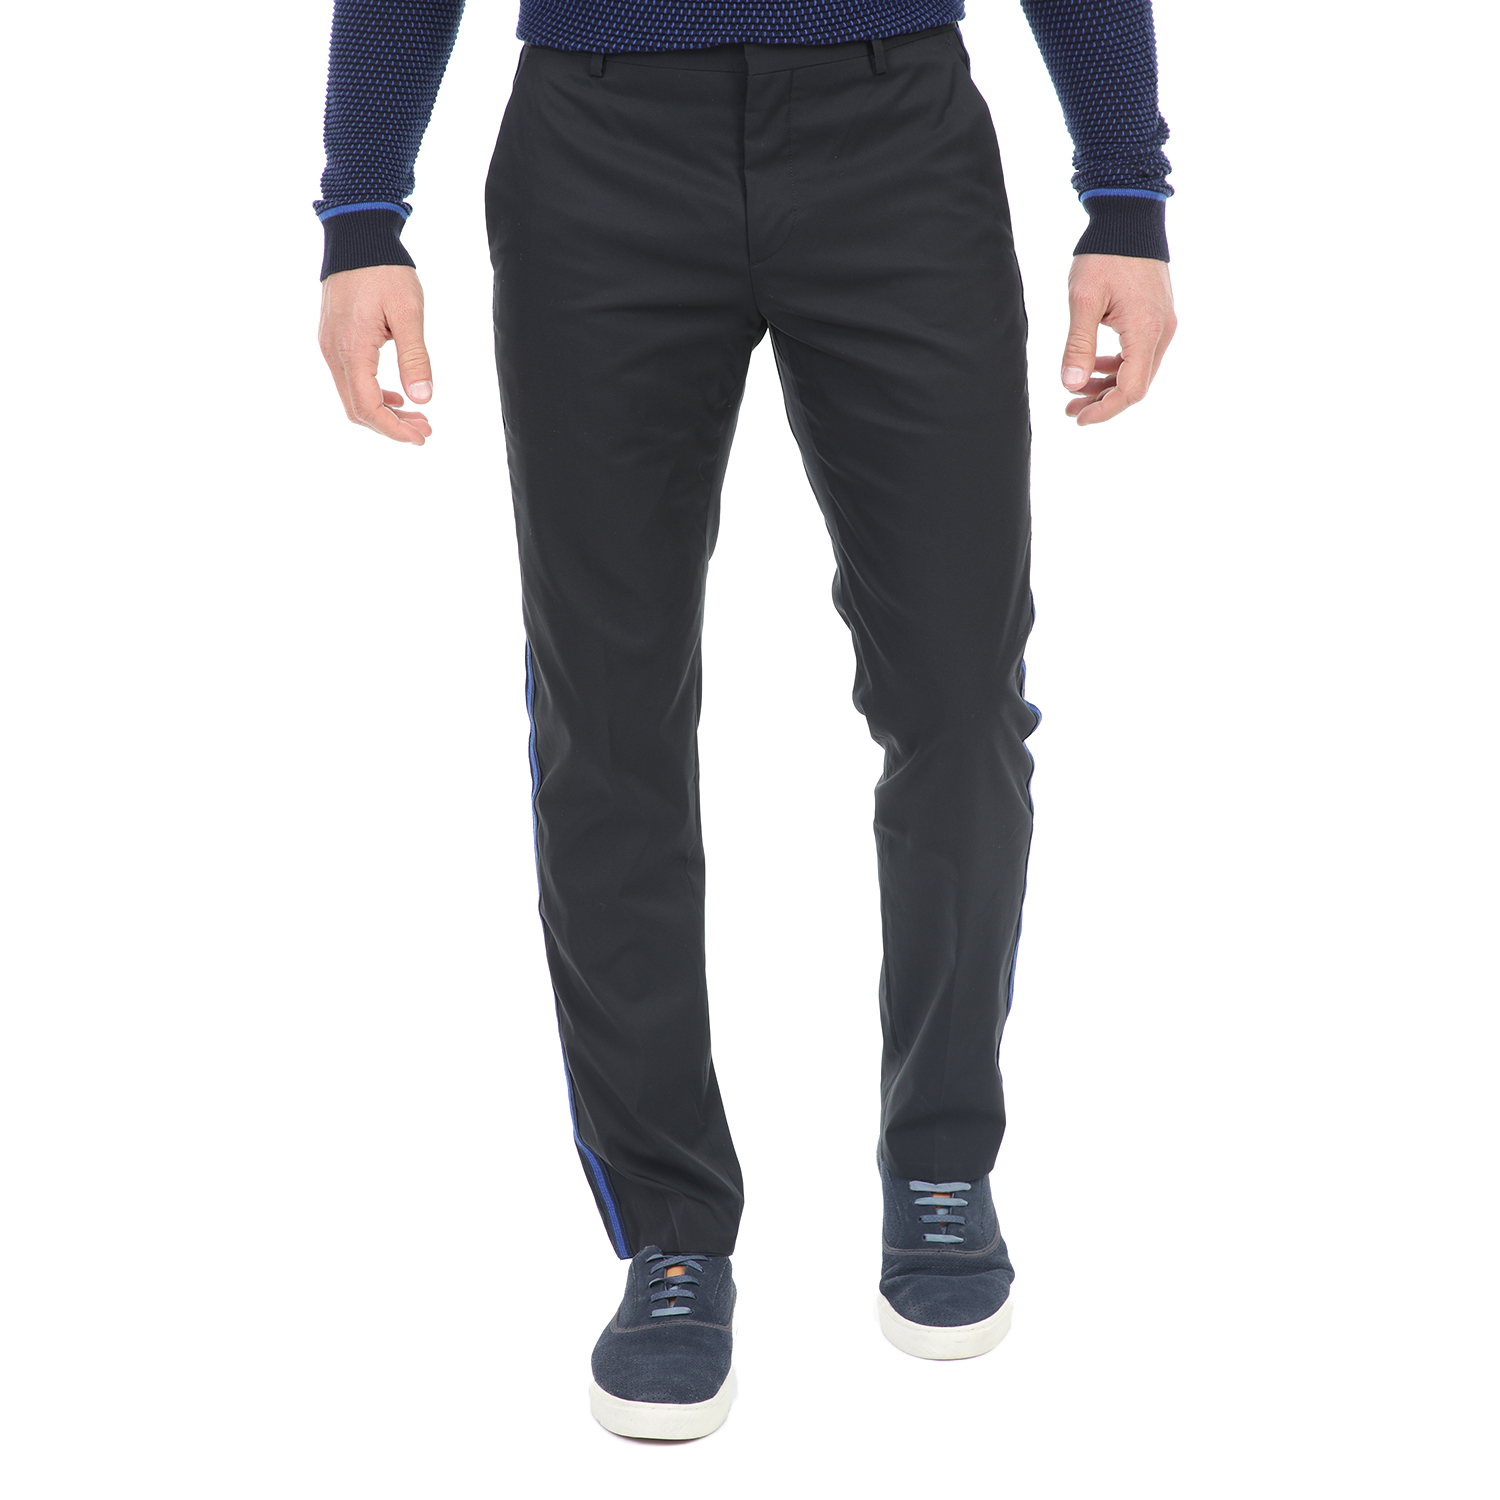 CK - Ανδρικό παντελόνι CK PARET FINE TECHNO TWILL μαύρο Ανδρικά/Ρούχα/Παντελόνια/Ισια Γραμμή